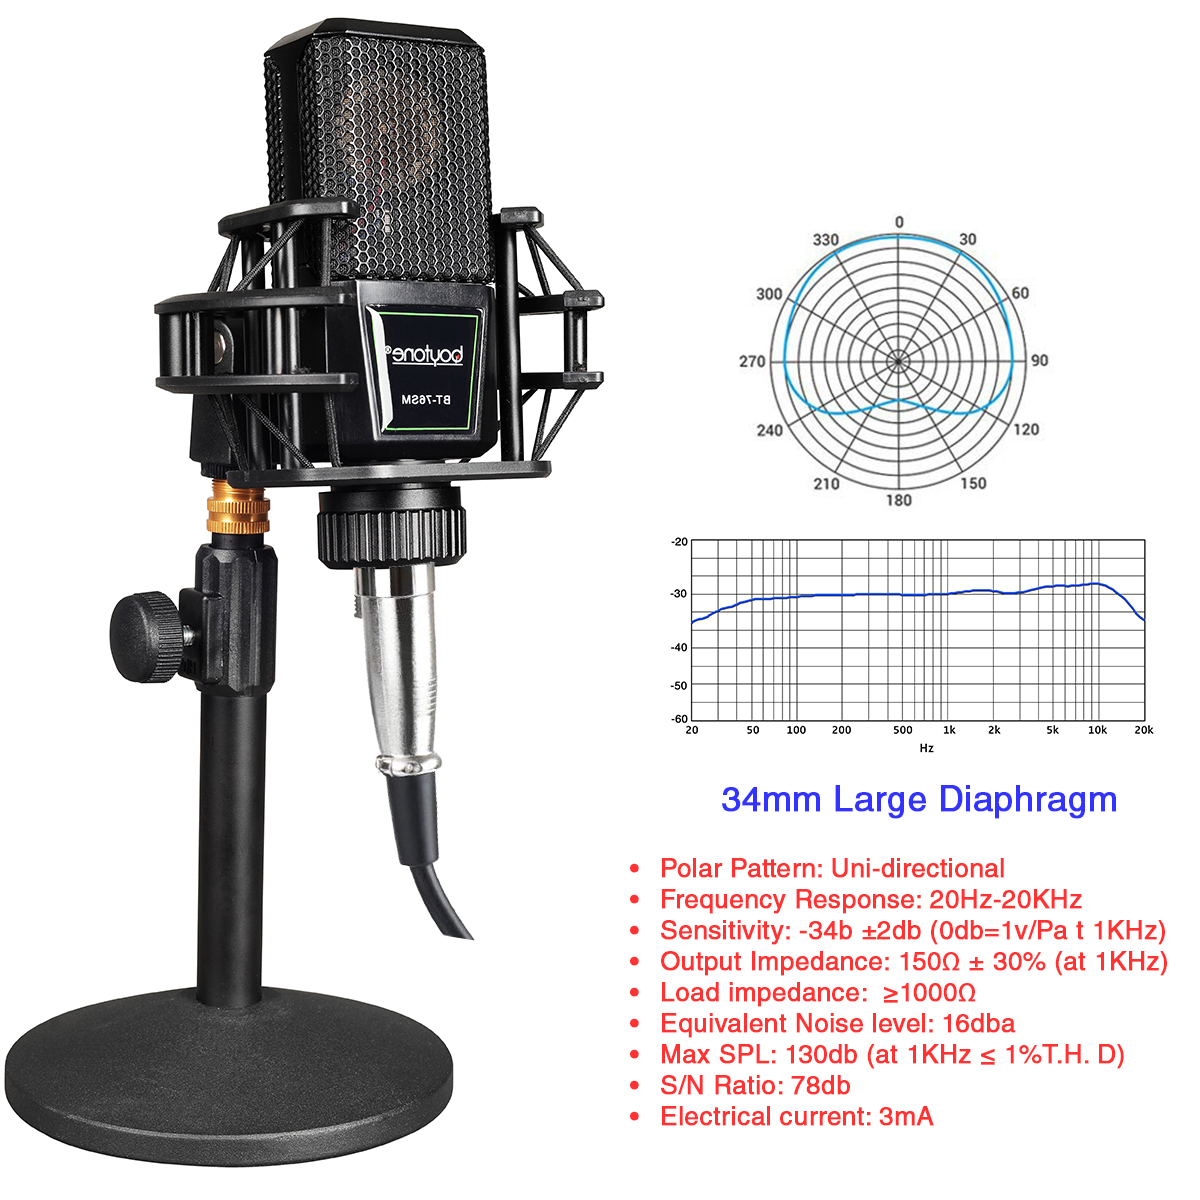 Boytone BT-76SM Professional Cardioid Condenser Studio Microphone, 34mm Large Diaphragm